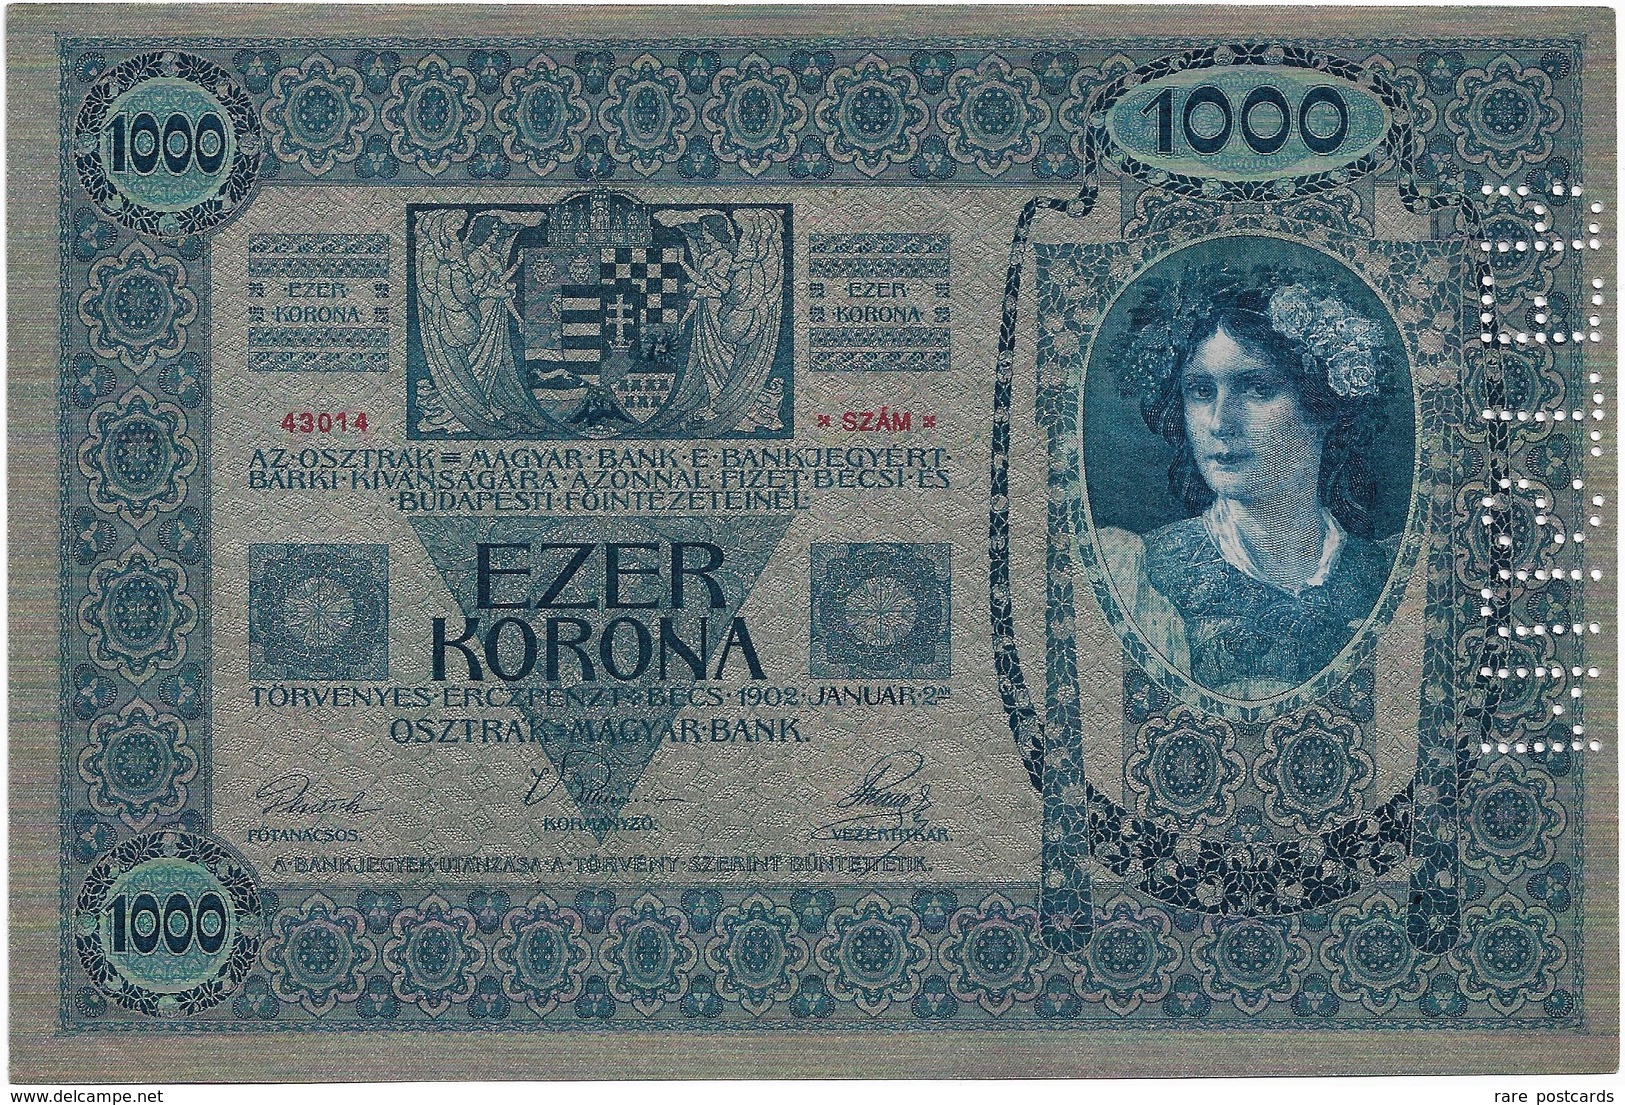 START 0.99e - MUSTER - Austro-Hungary 1000 Kronen 1902. Xf - Specimen - Mega Rare In This Form - Austria - Hungary - Autriche